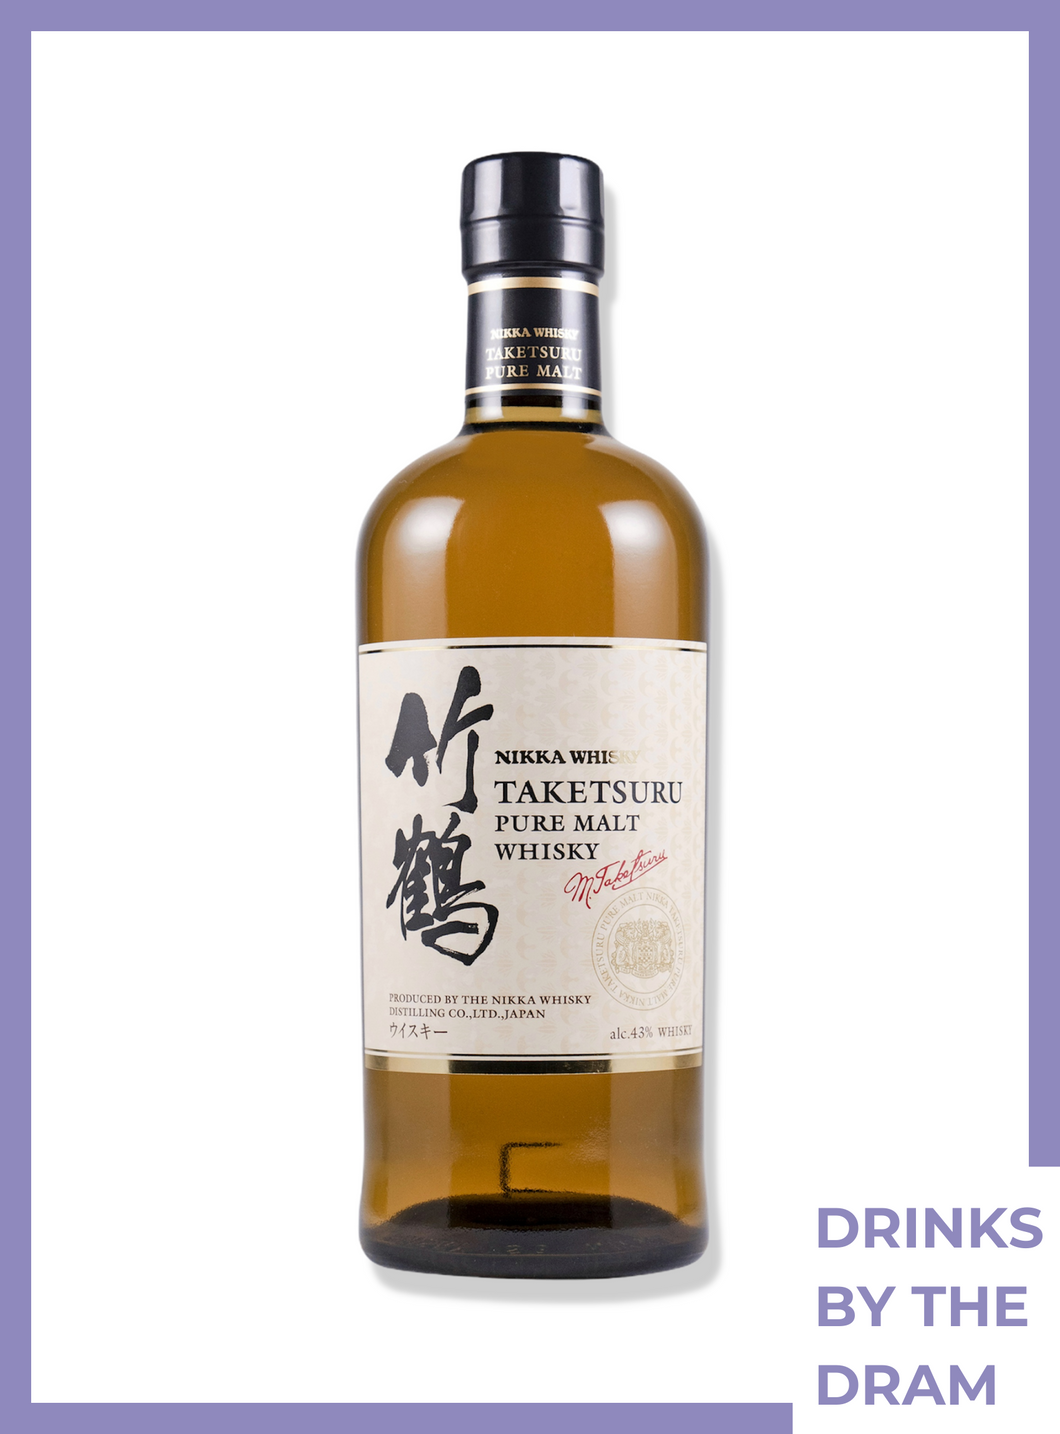 By the Dram (30 ml): Taketsuru Pure Malt Whisky 2020 Release, NAS